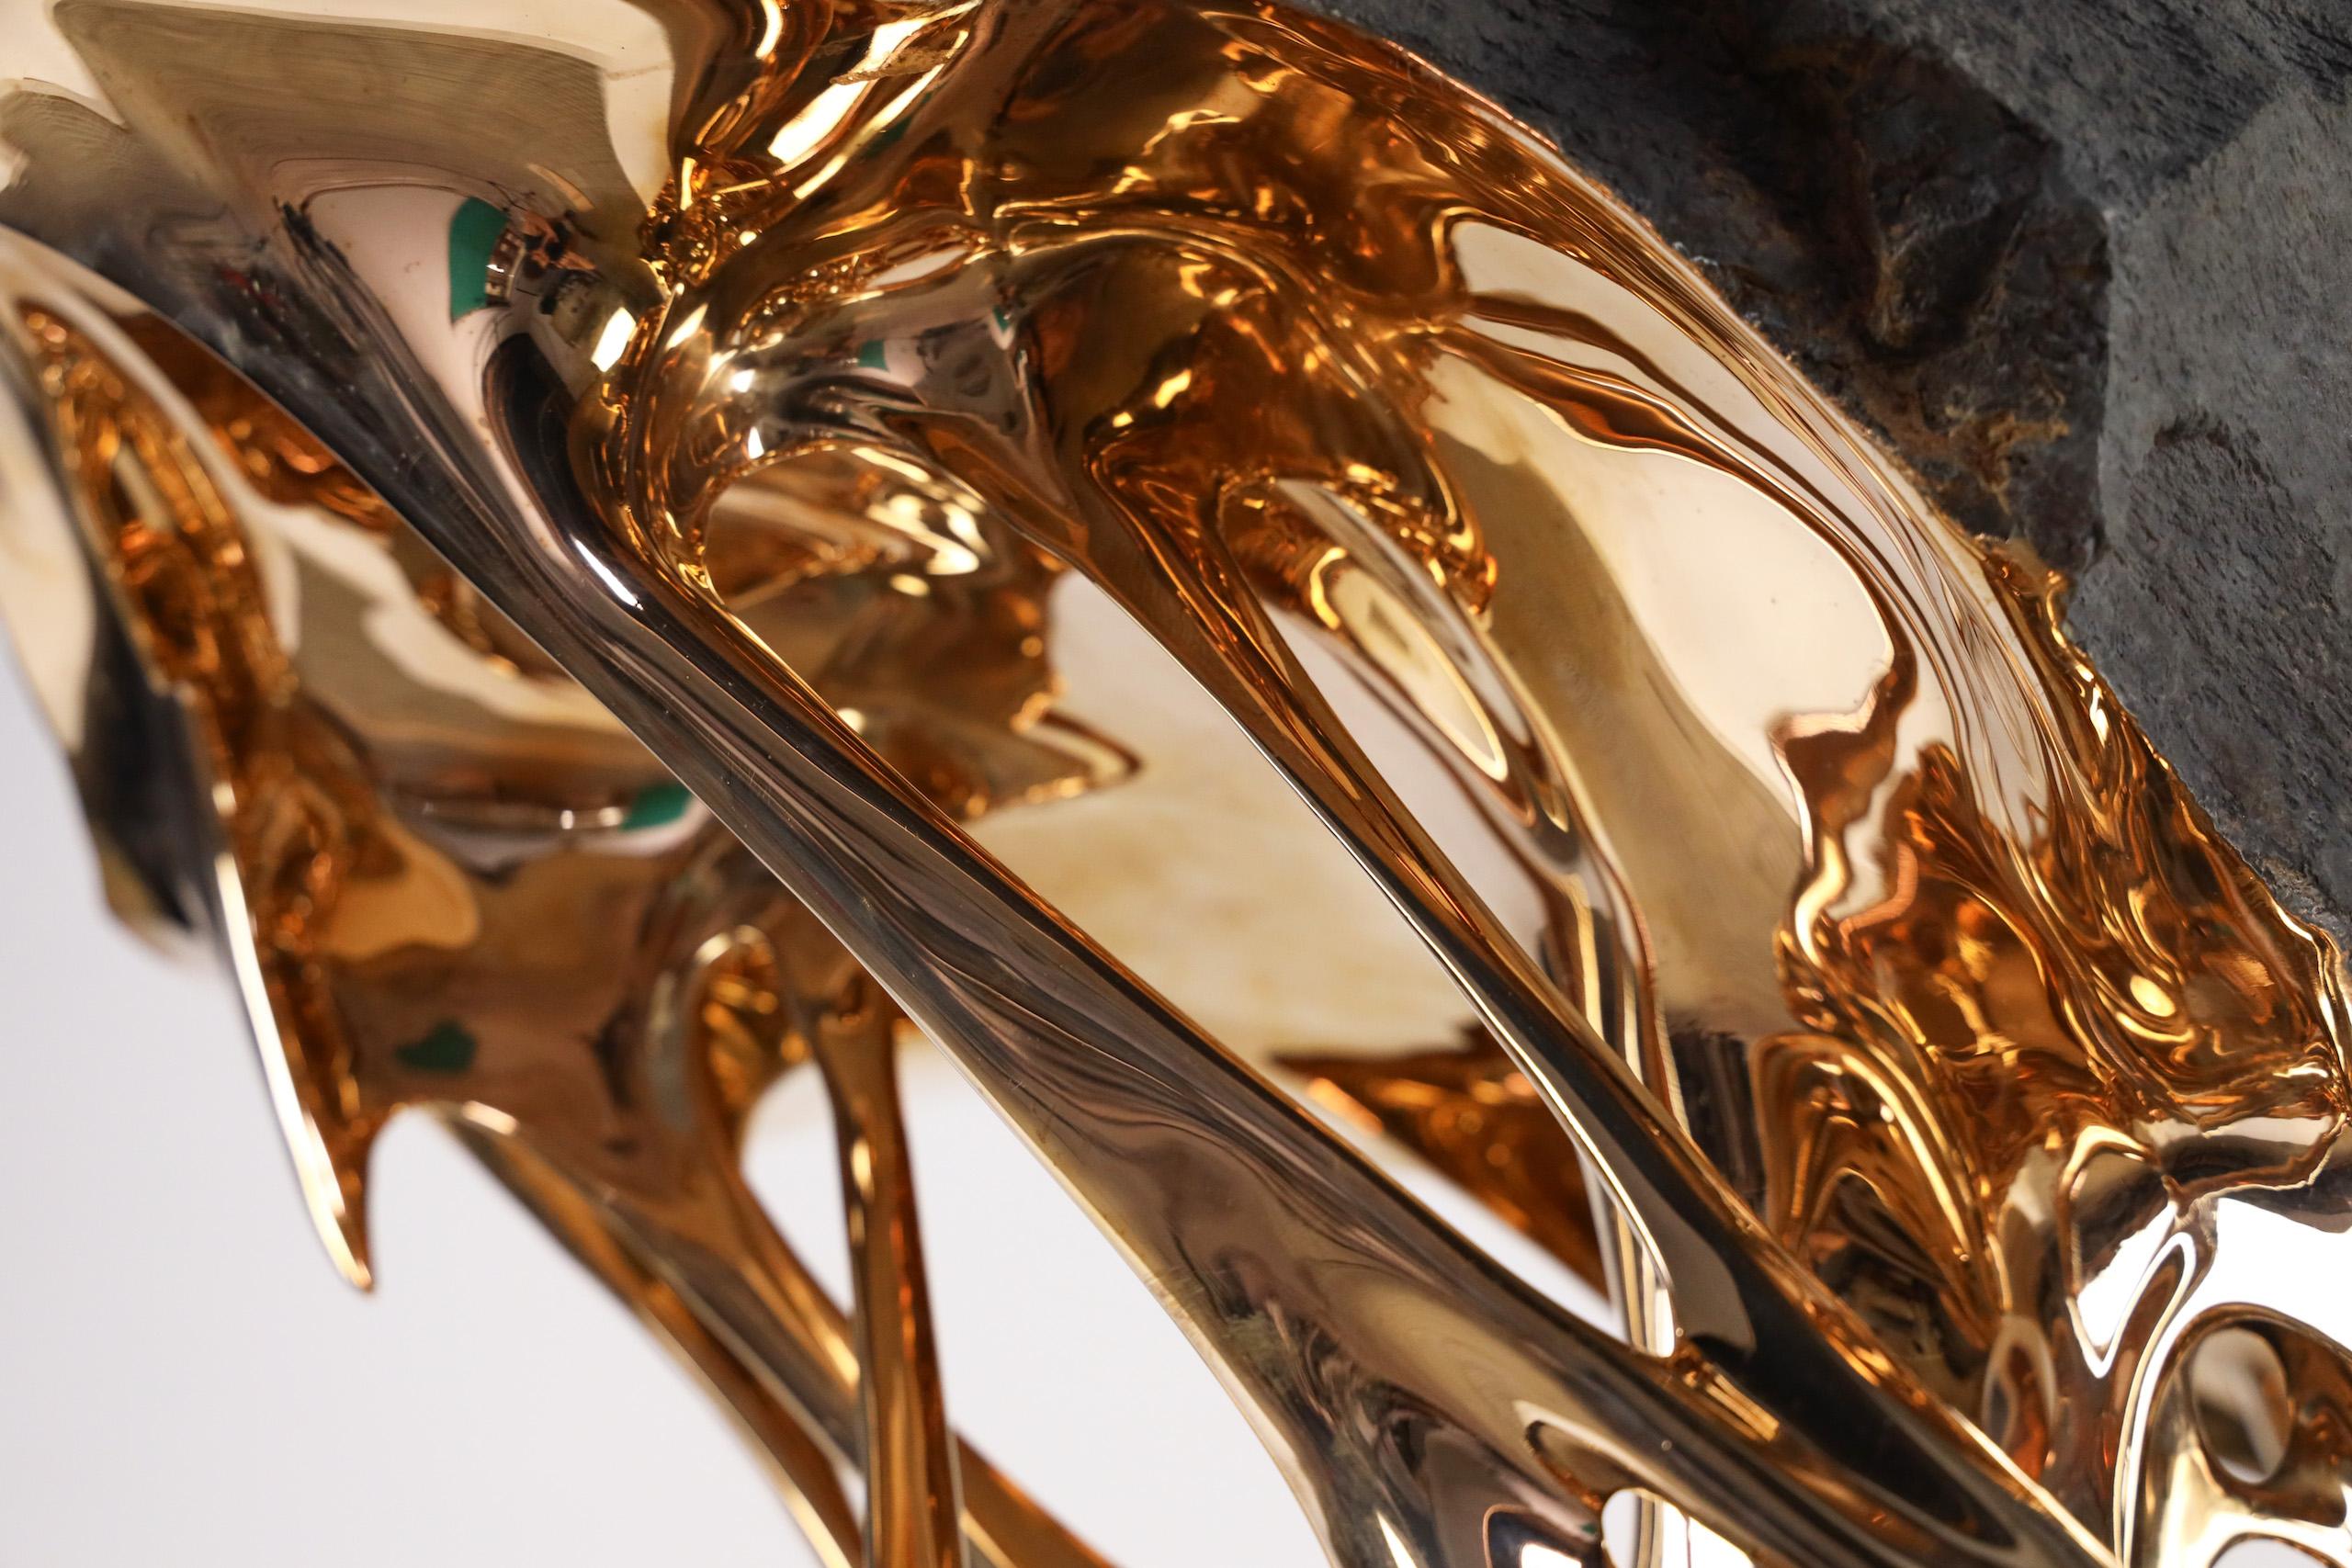 Gaïa by Romain Langlois - Rock-like bronze sculpture, golden, abstract For Sale 8